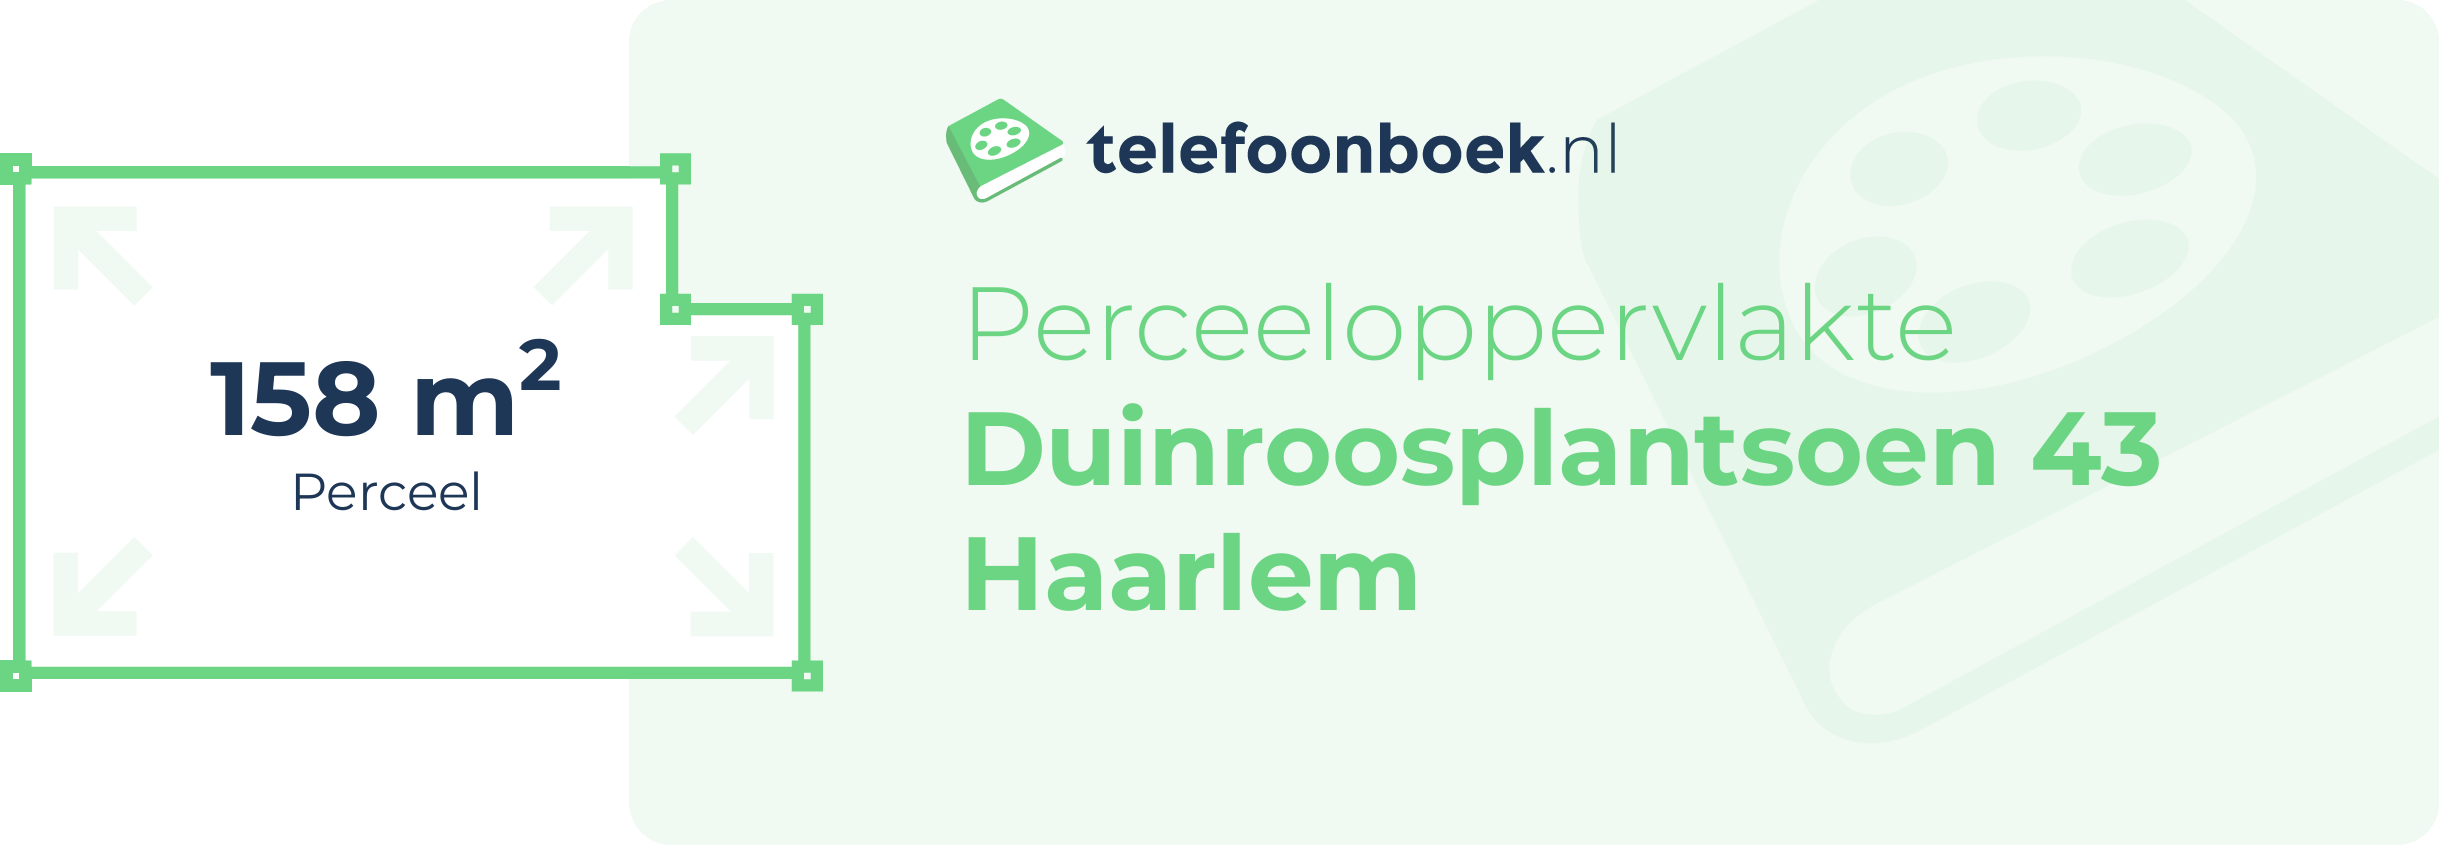 Perceeloppervlakte Duinroosplantsoen 43 Haarlem